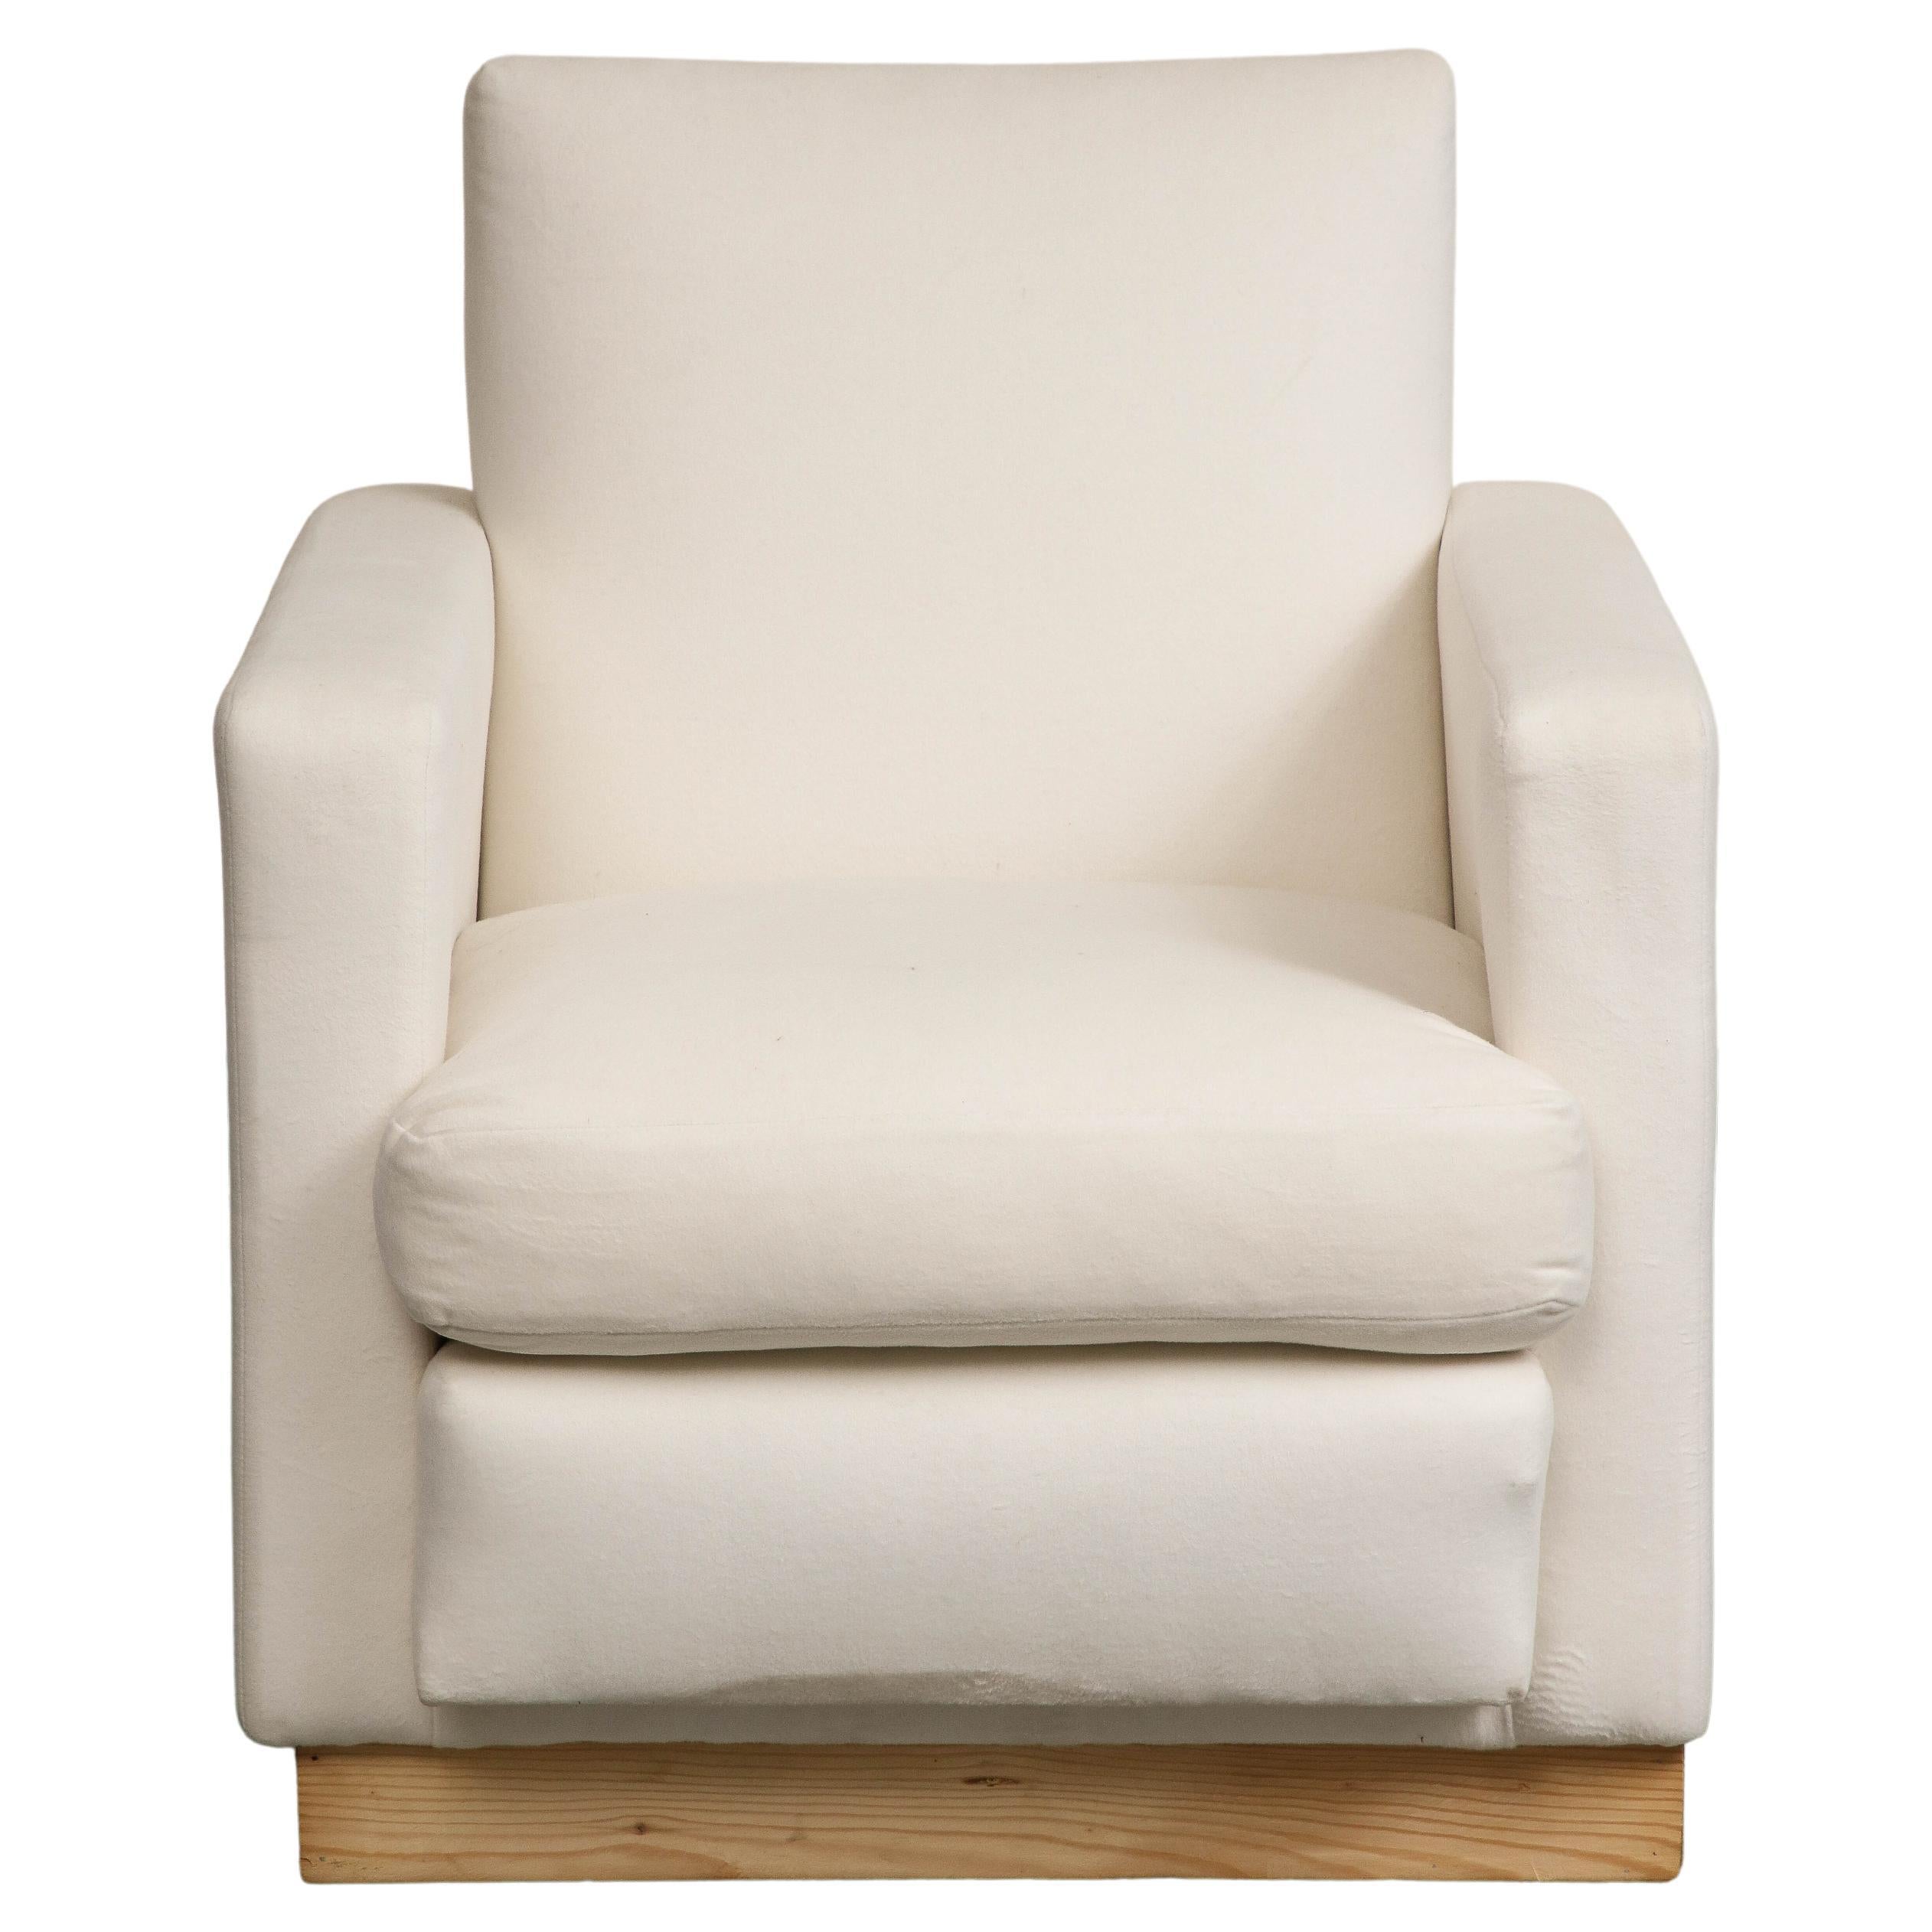 Midcentury Italian Club Chair by Giuseppe Pagano Pogatschnig, 1940s. Newly upholstered in Bart Halpern Brisbane Winter White wool/angora blend; exposed wood base. 

34